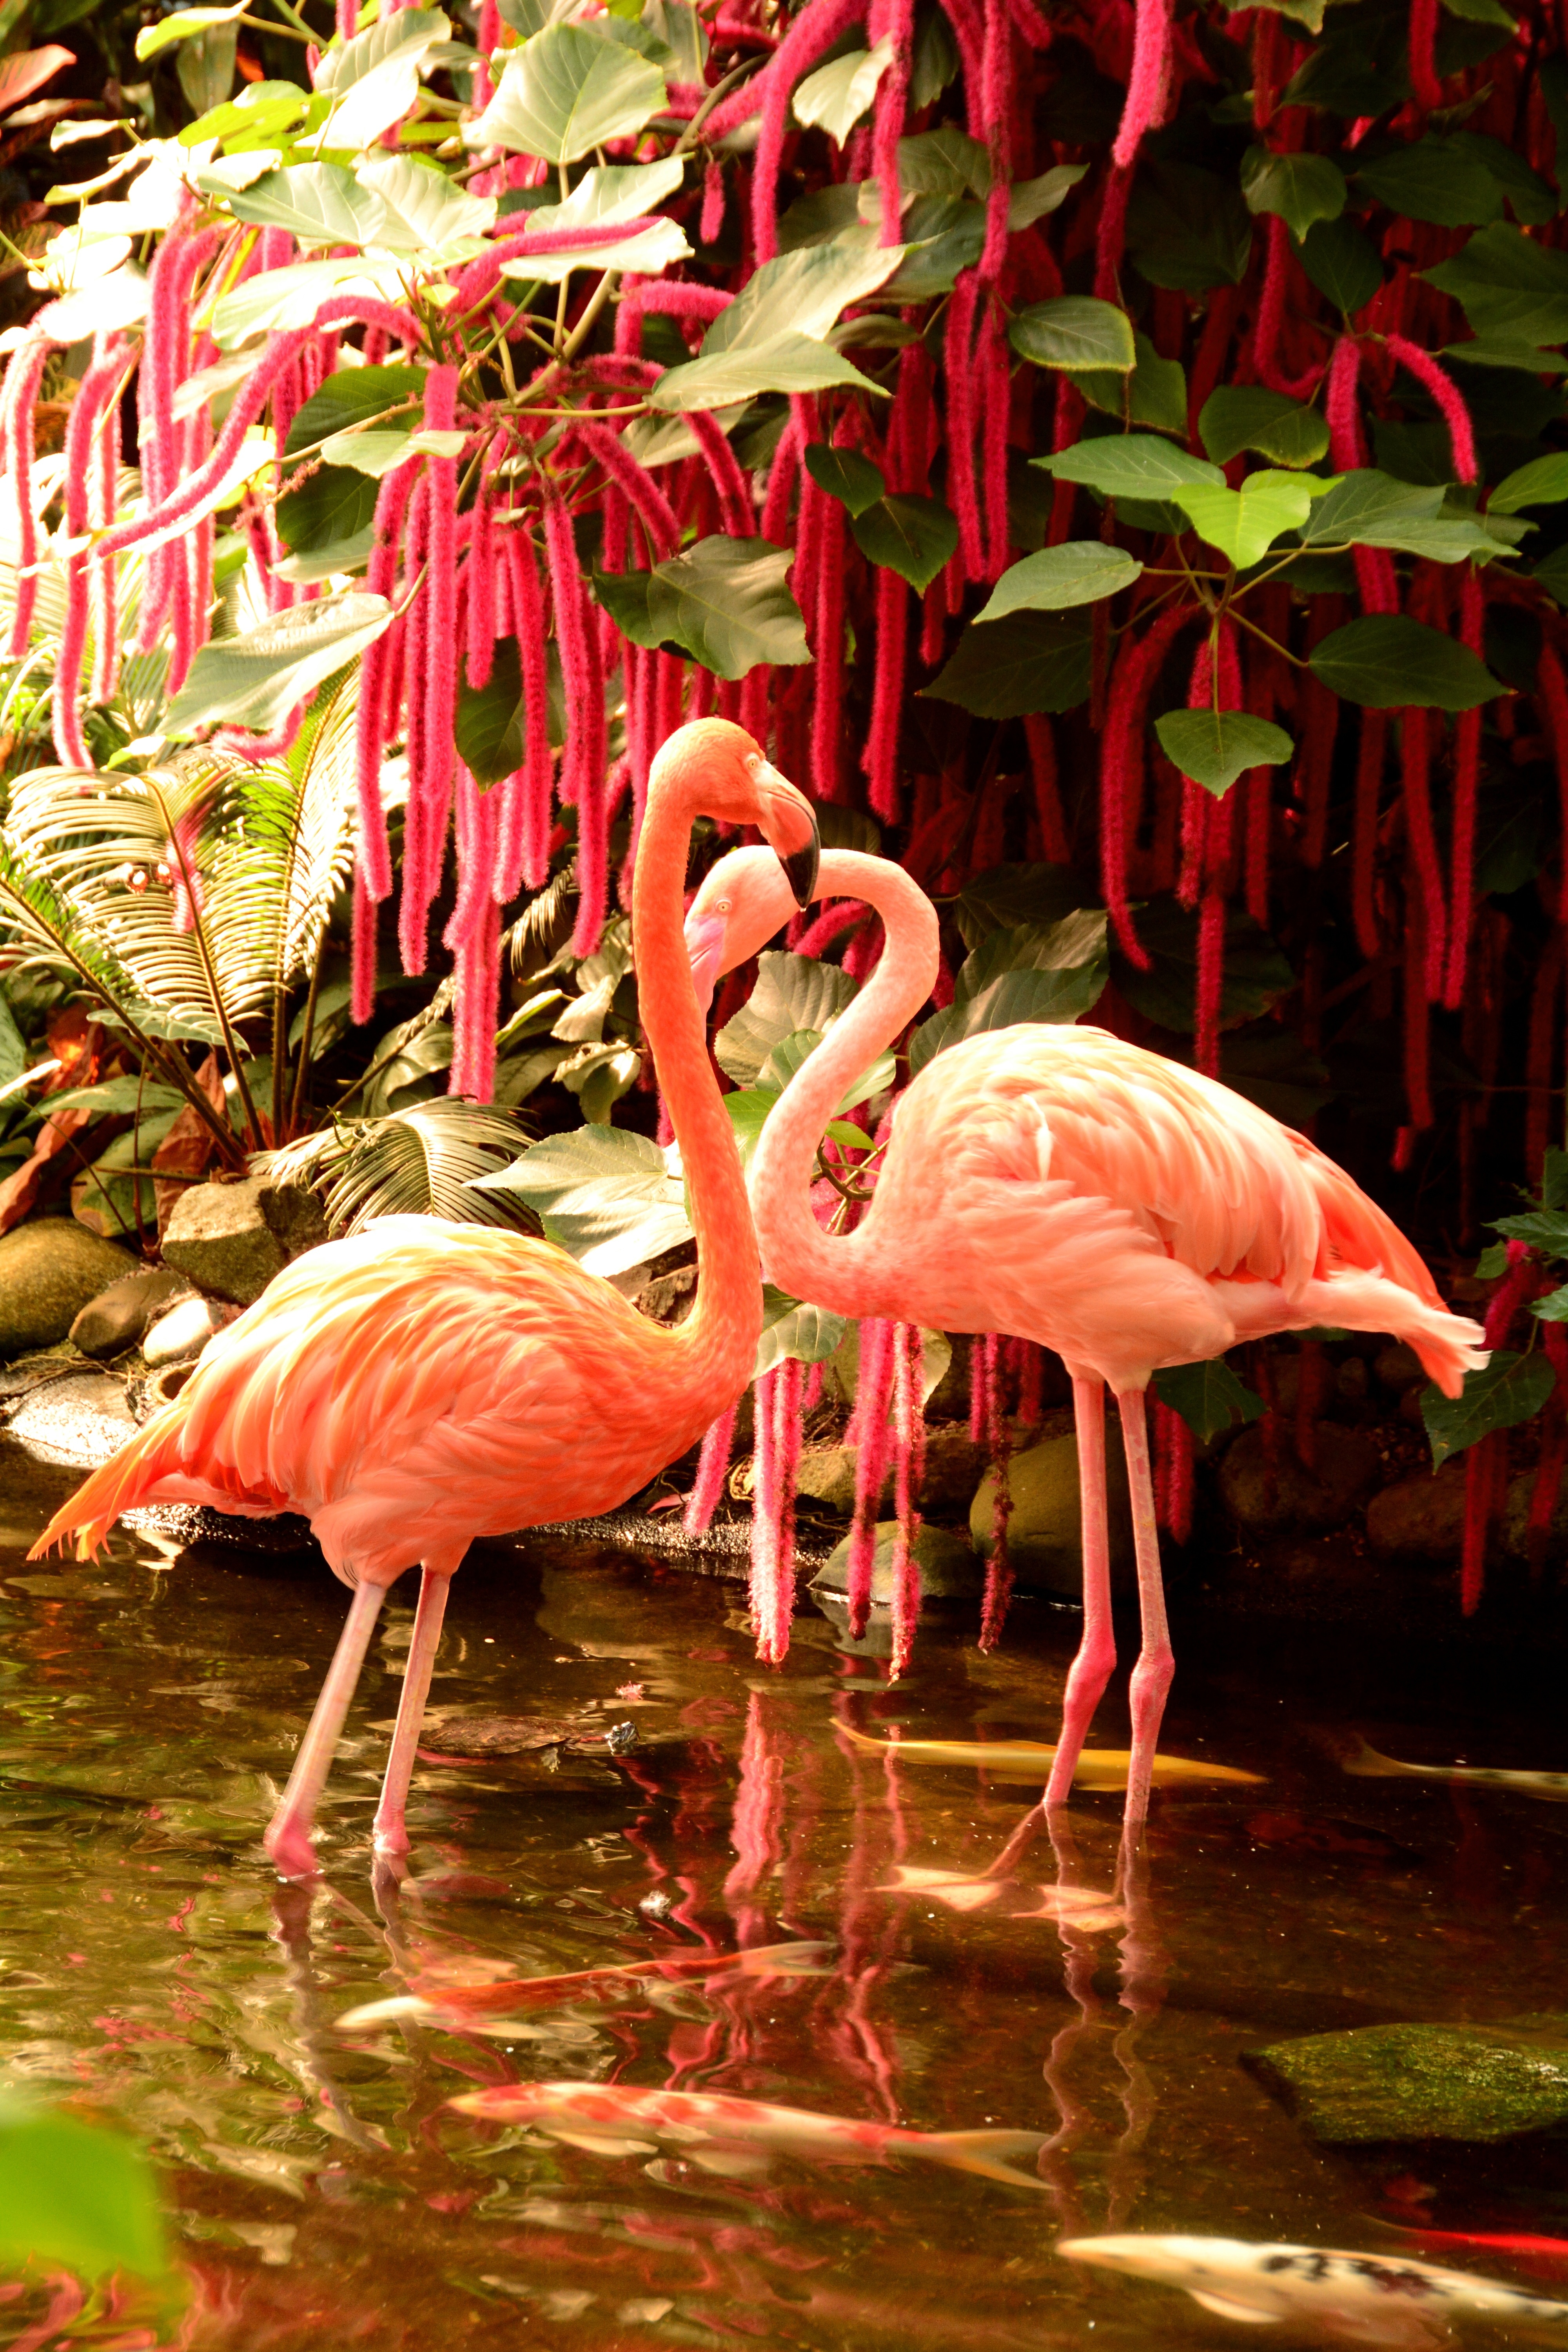 twp orange flamingos on body of water near flowers